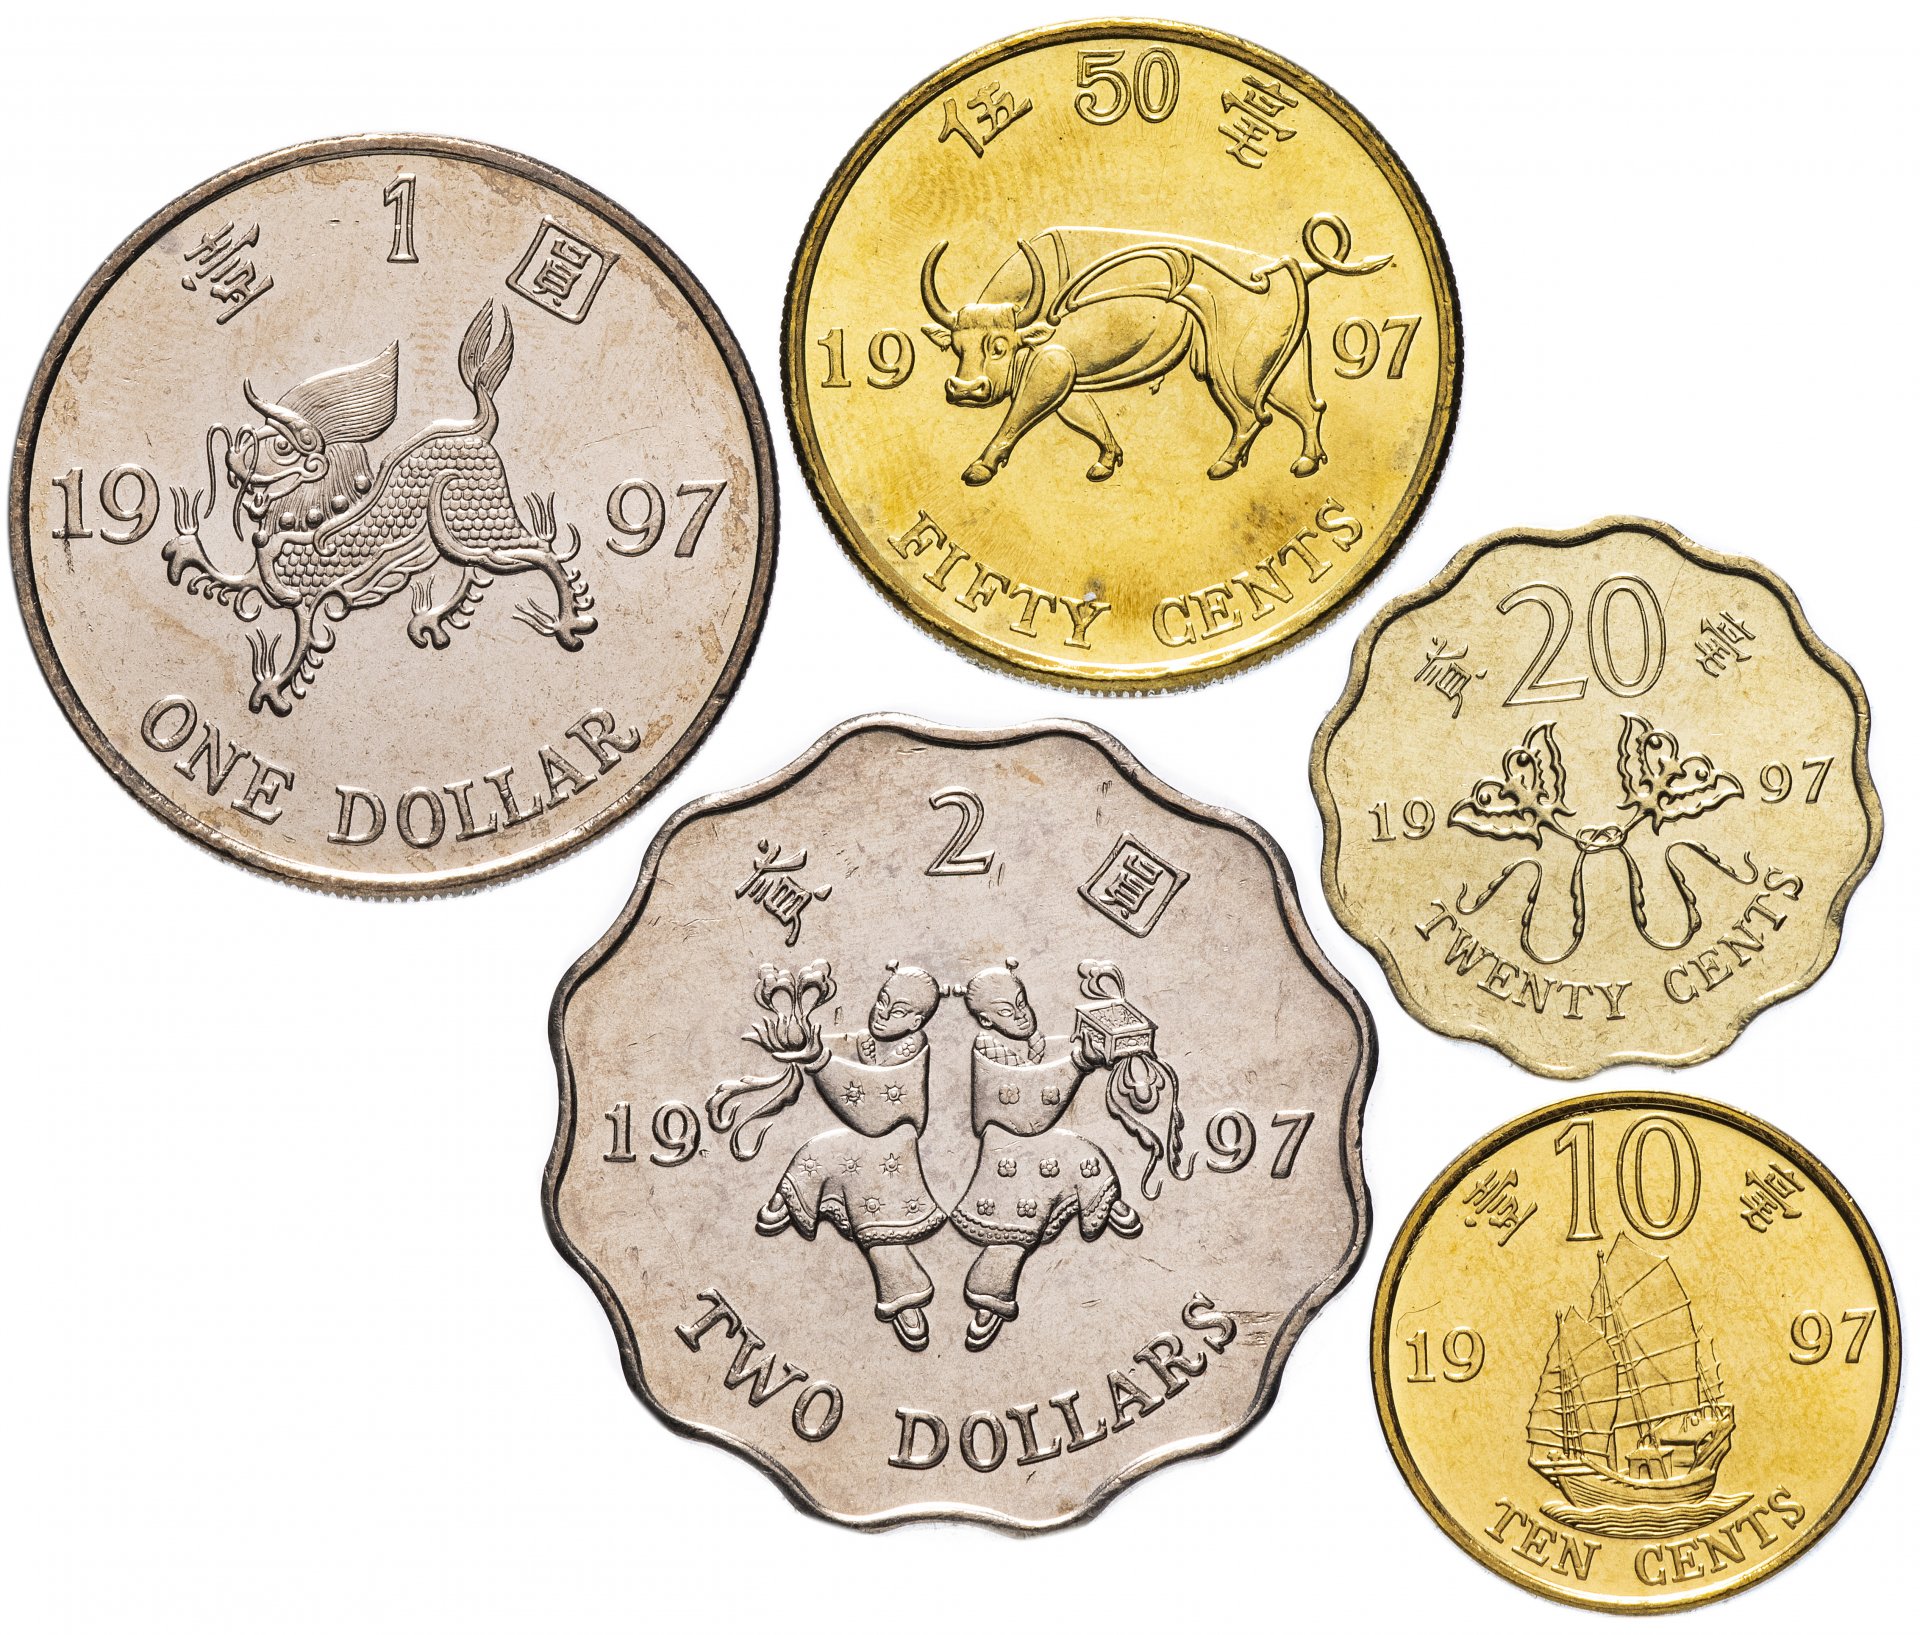 899 hkd в рублях. Монеты Гонг Конг. Монеты Гонконг 1 юань. Гонконг валюта монеты. Гонконгский доллар монеты.